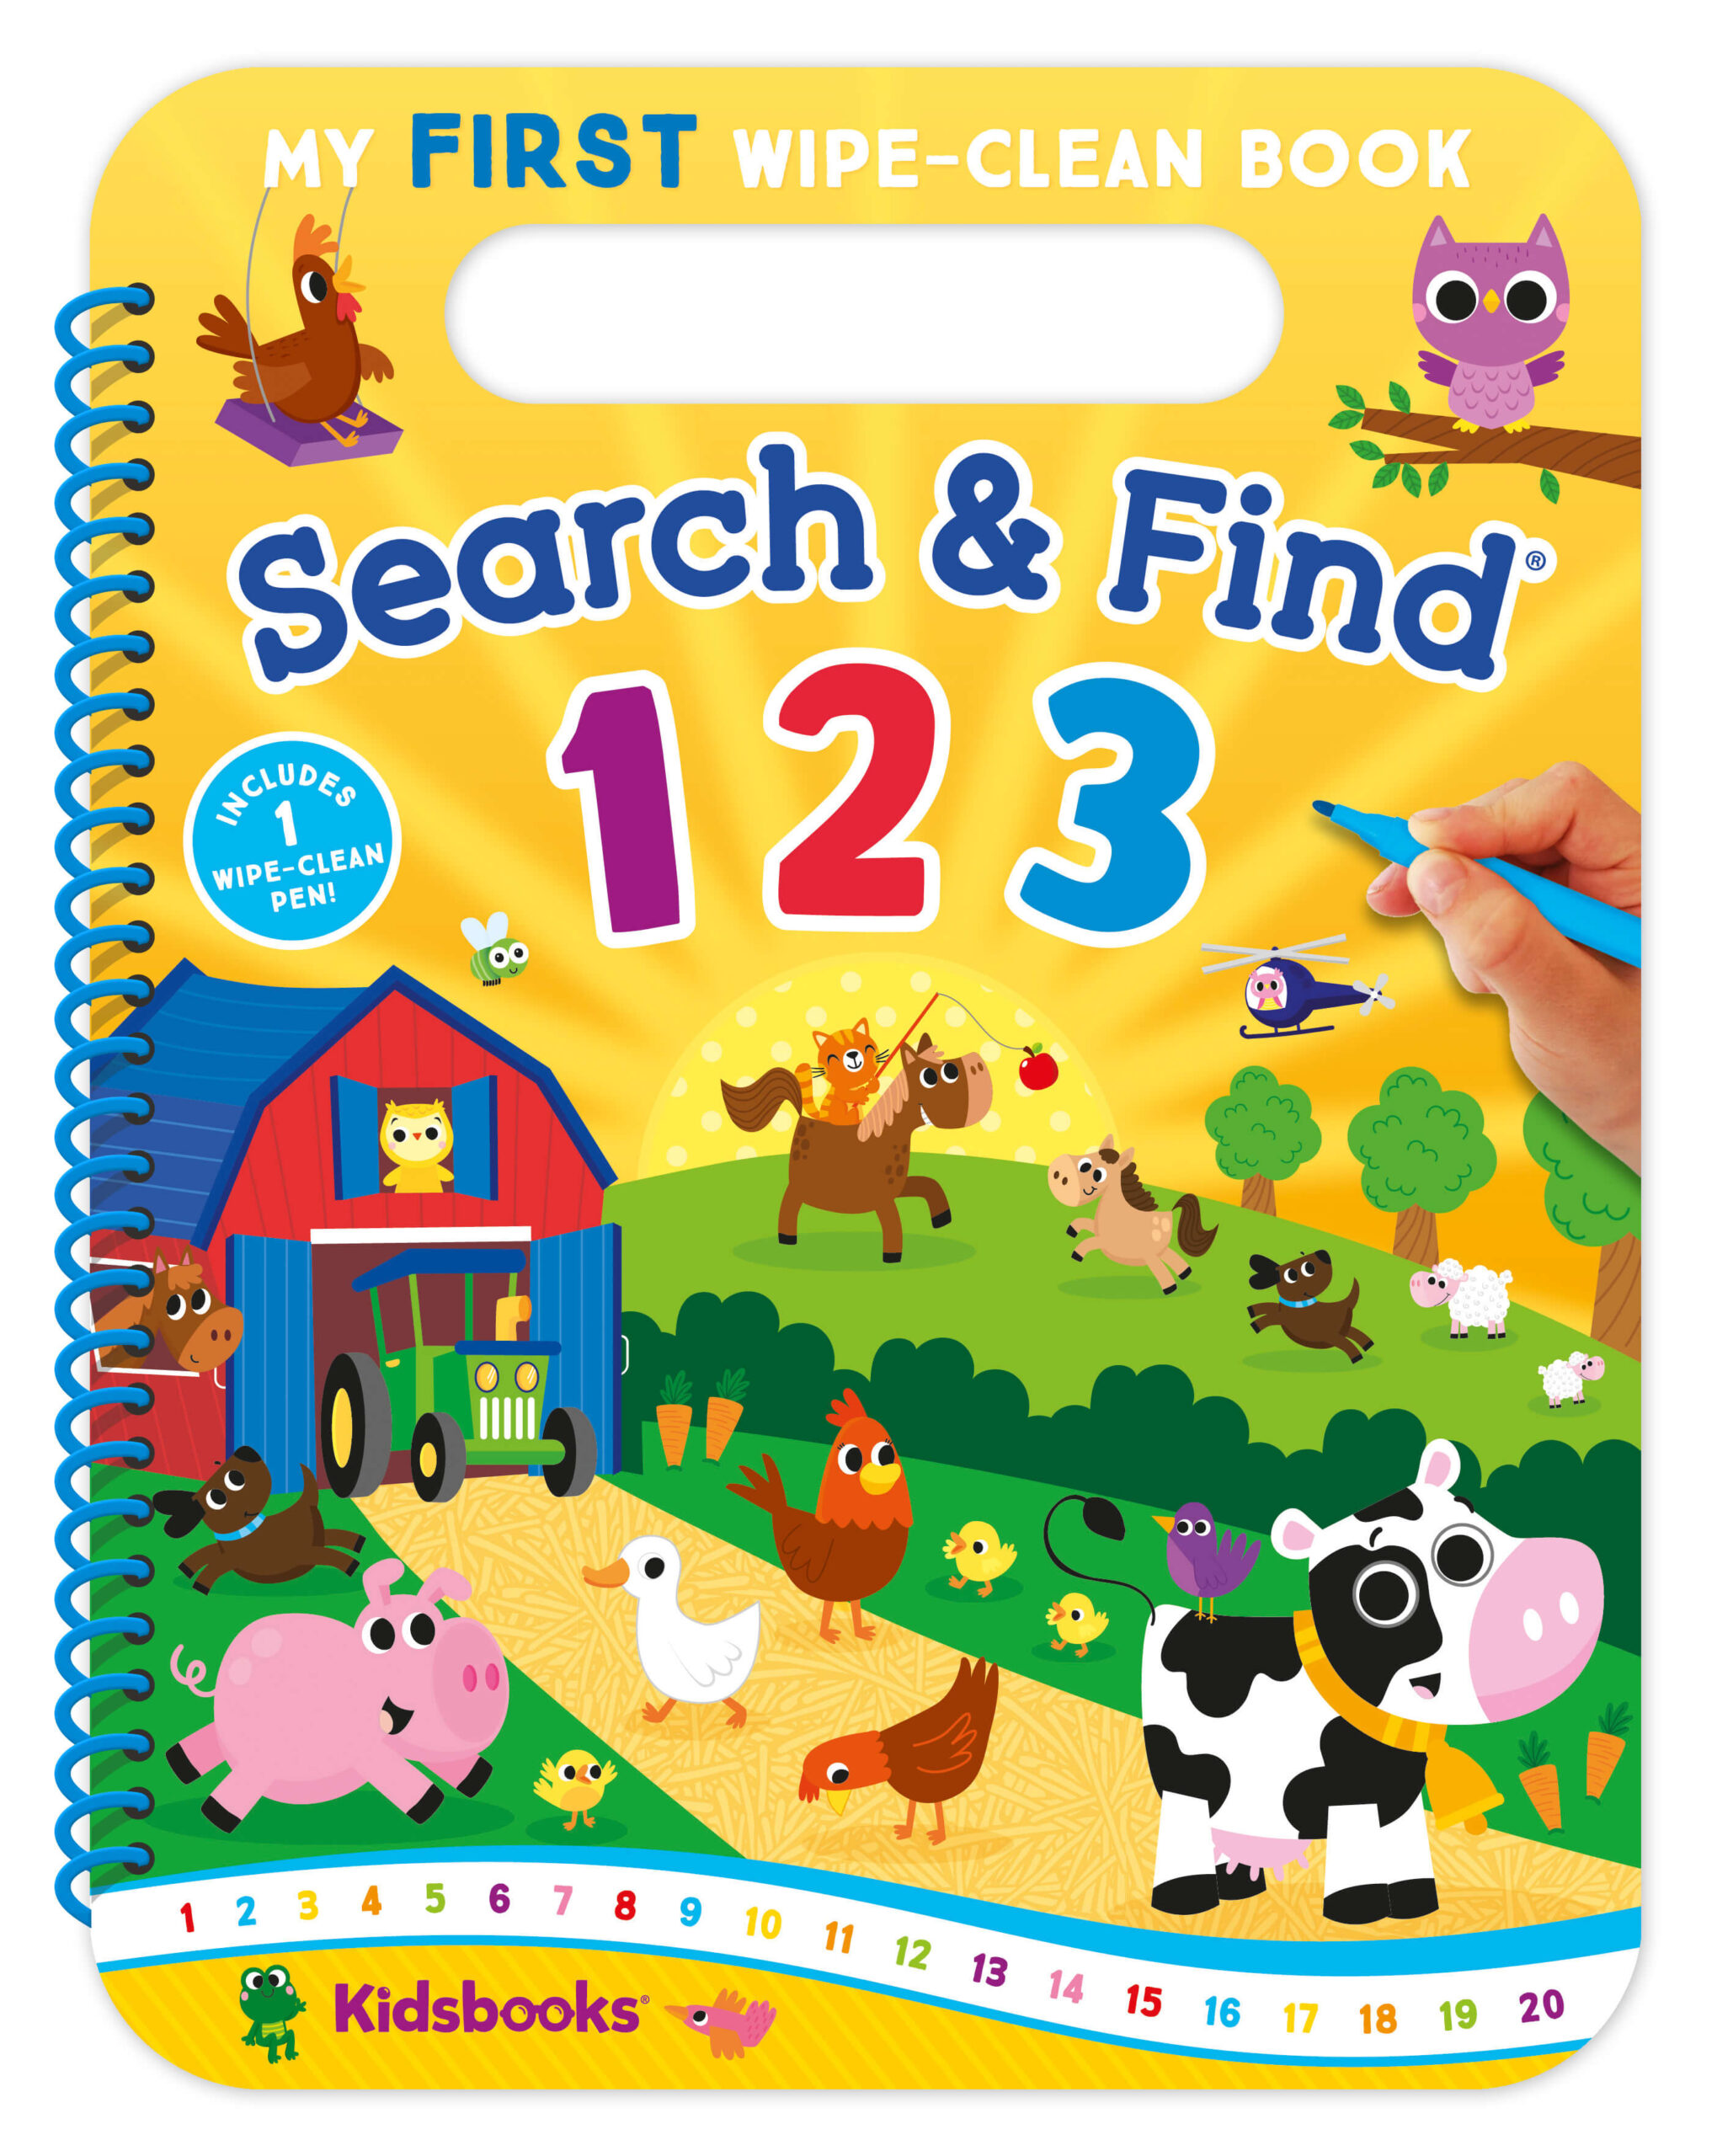 My First Wipe-Clean Book: Search & Find 123